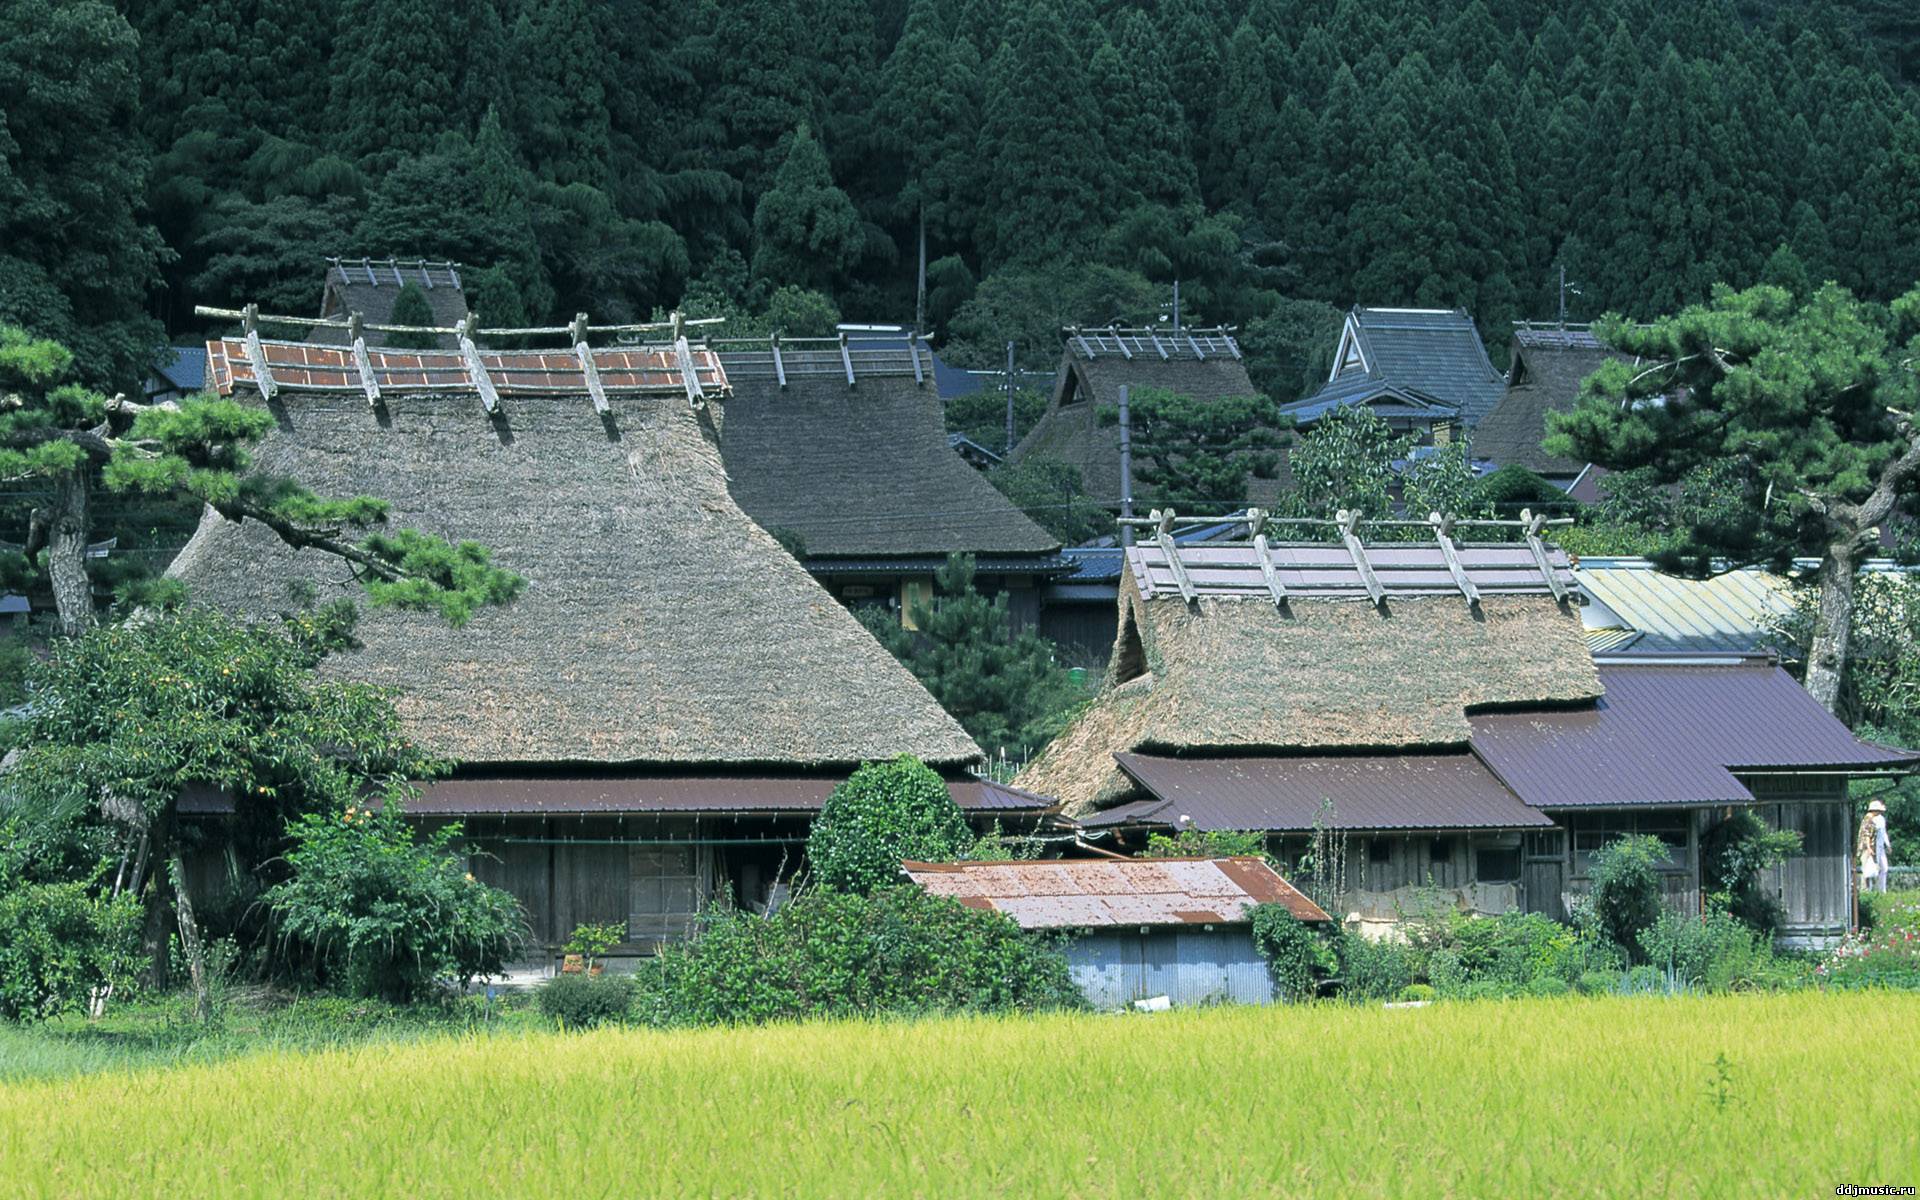 Japanese village. Японская деревня. Японский деревенский дом. Япония Сельская местность. Деревенский домик в Японии.